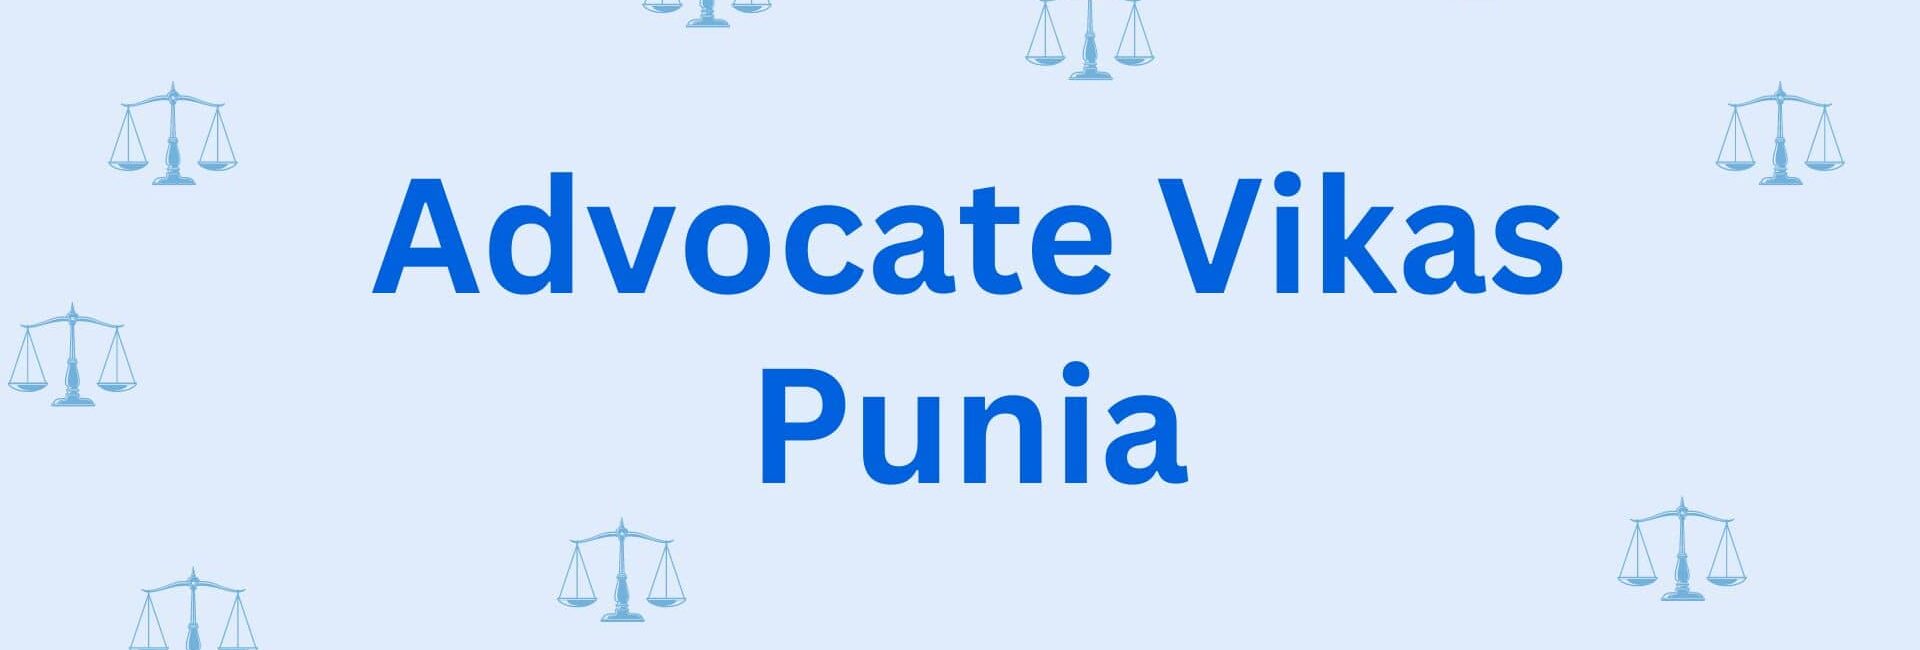 Advocate Vikas Punia - Legal Service Provider In Hisar